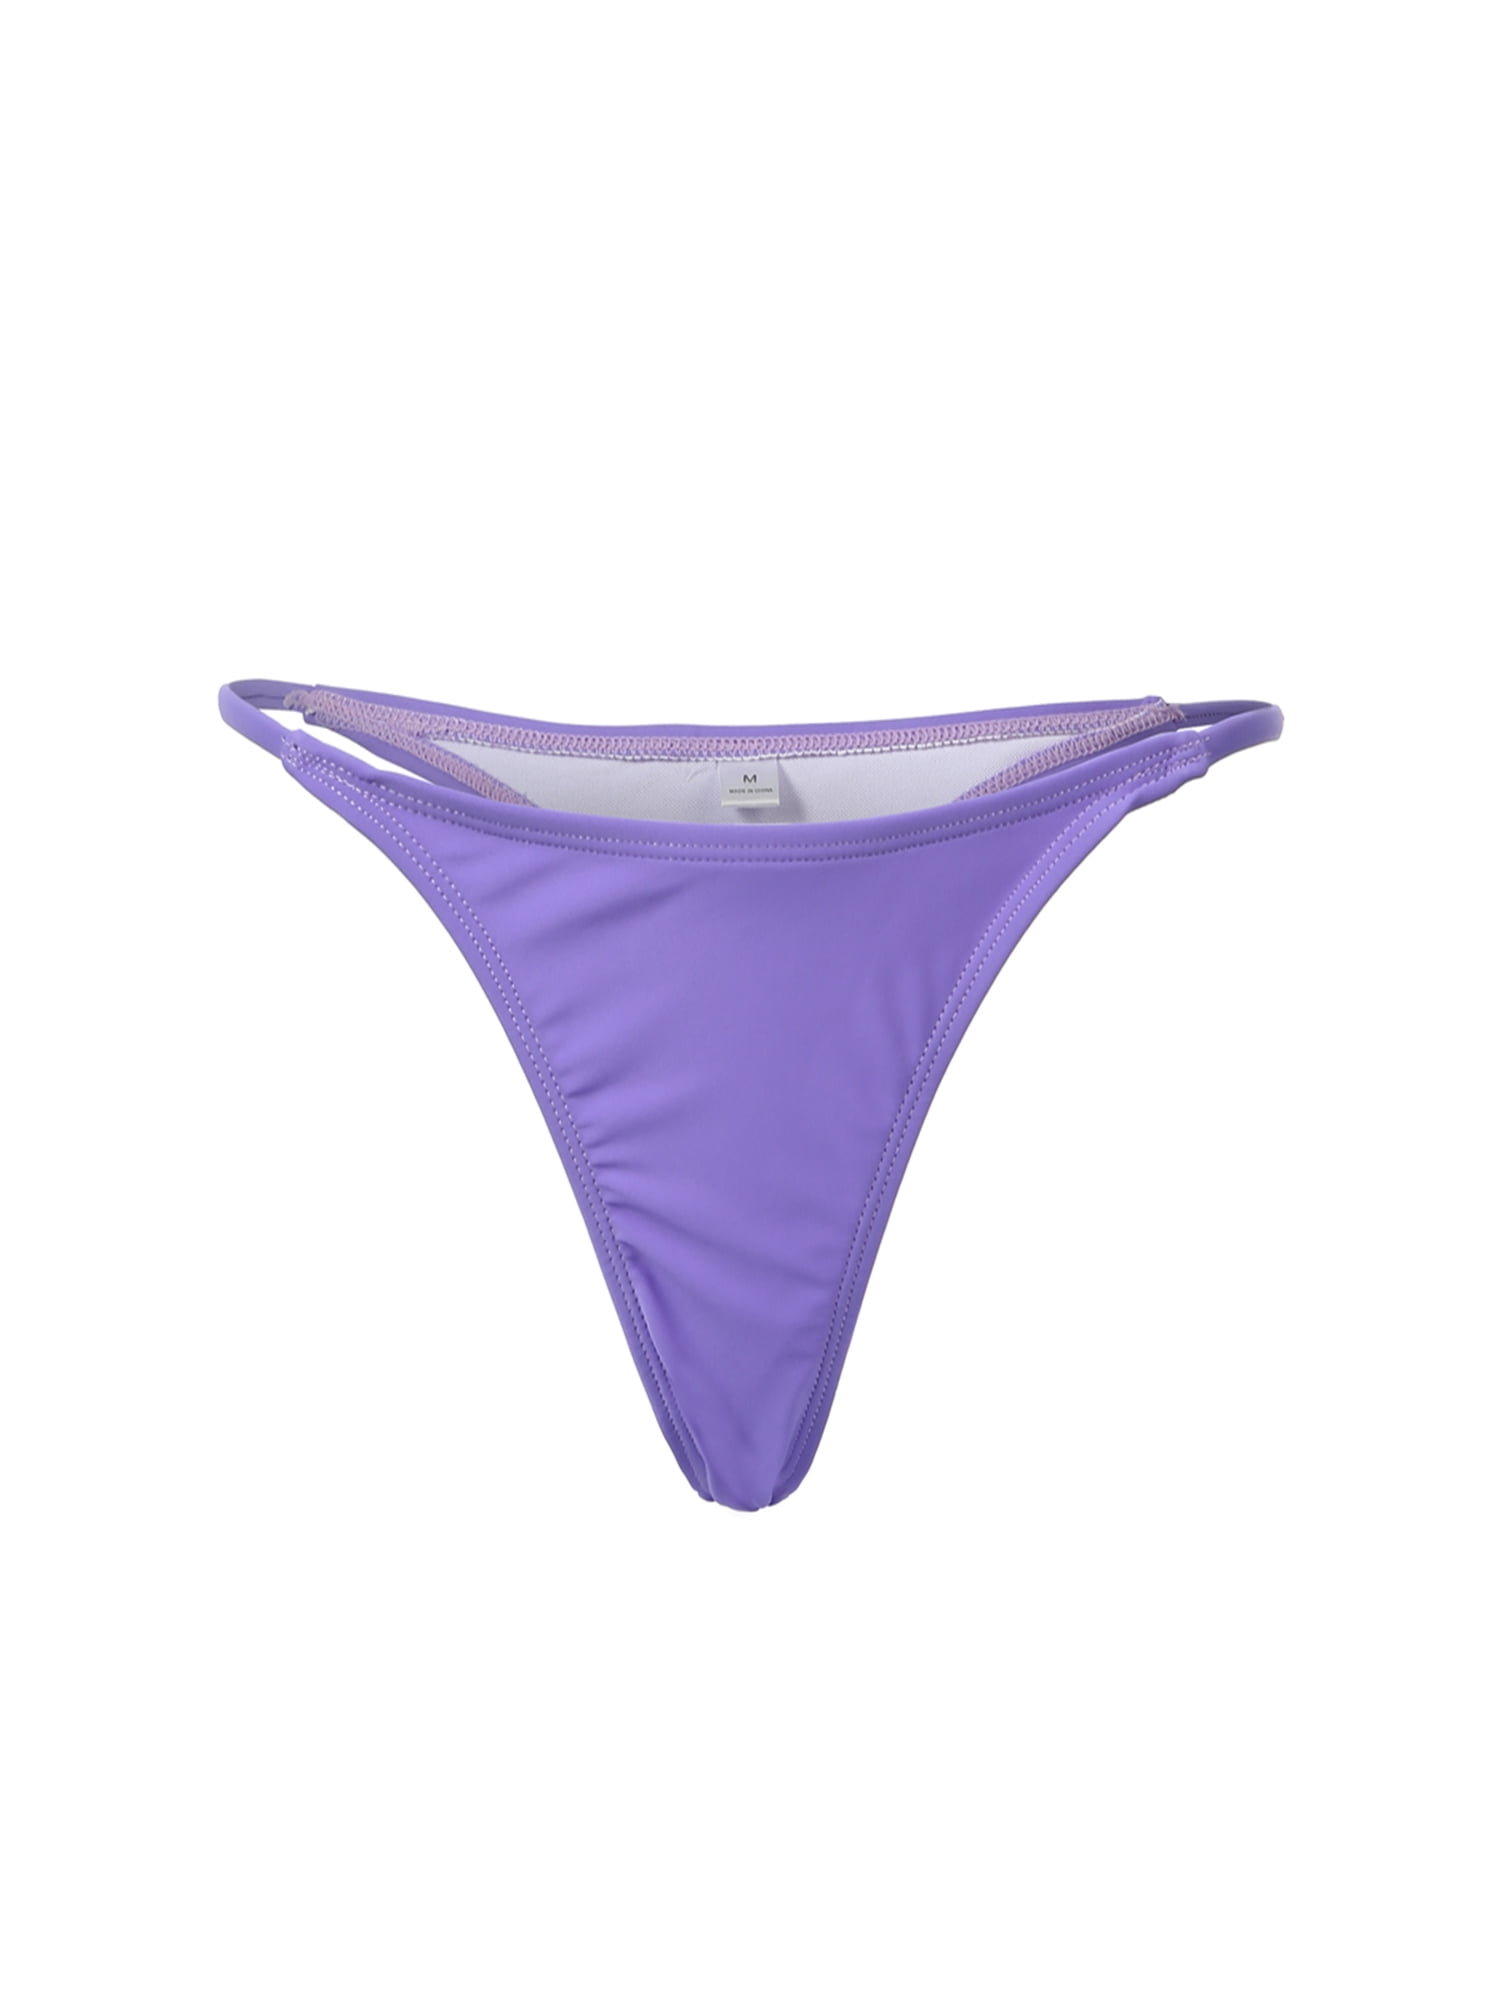 Gergngdo Women's Swimming Pants, Solid Color Swimming Trunks Bikini ...